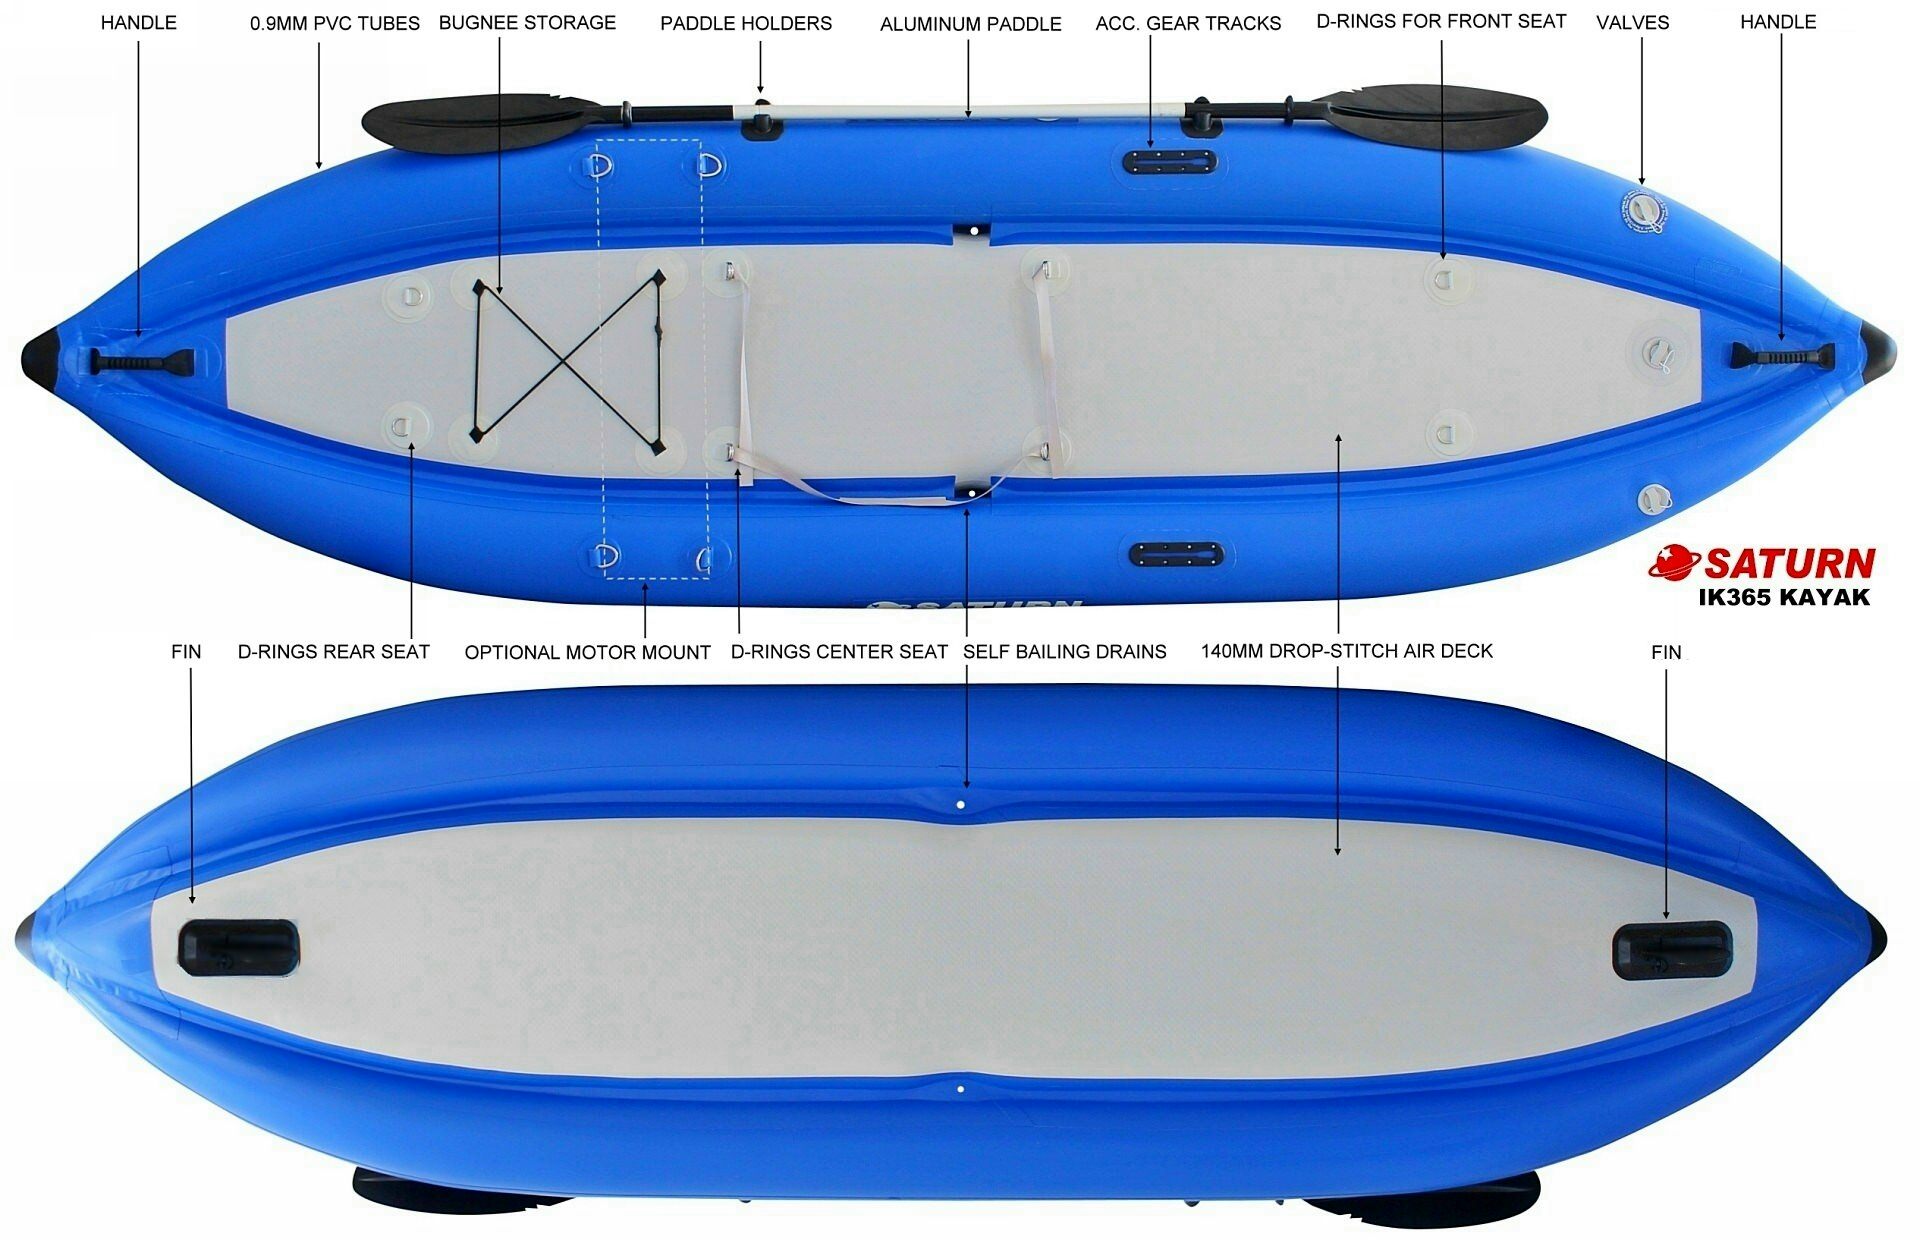 Saturn IK365 inflatable kayak specs